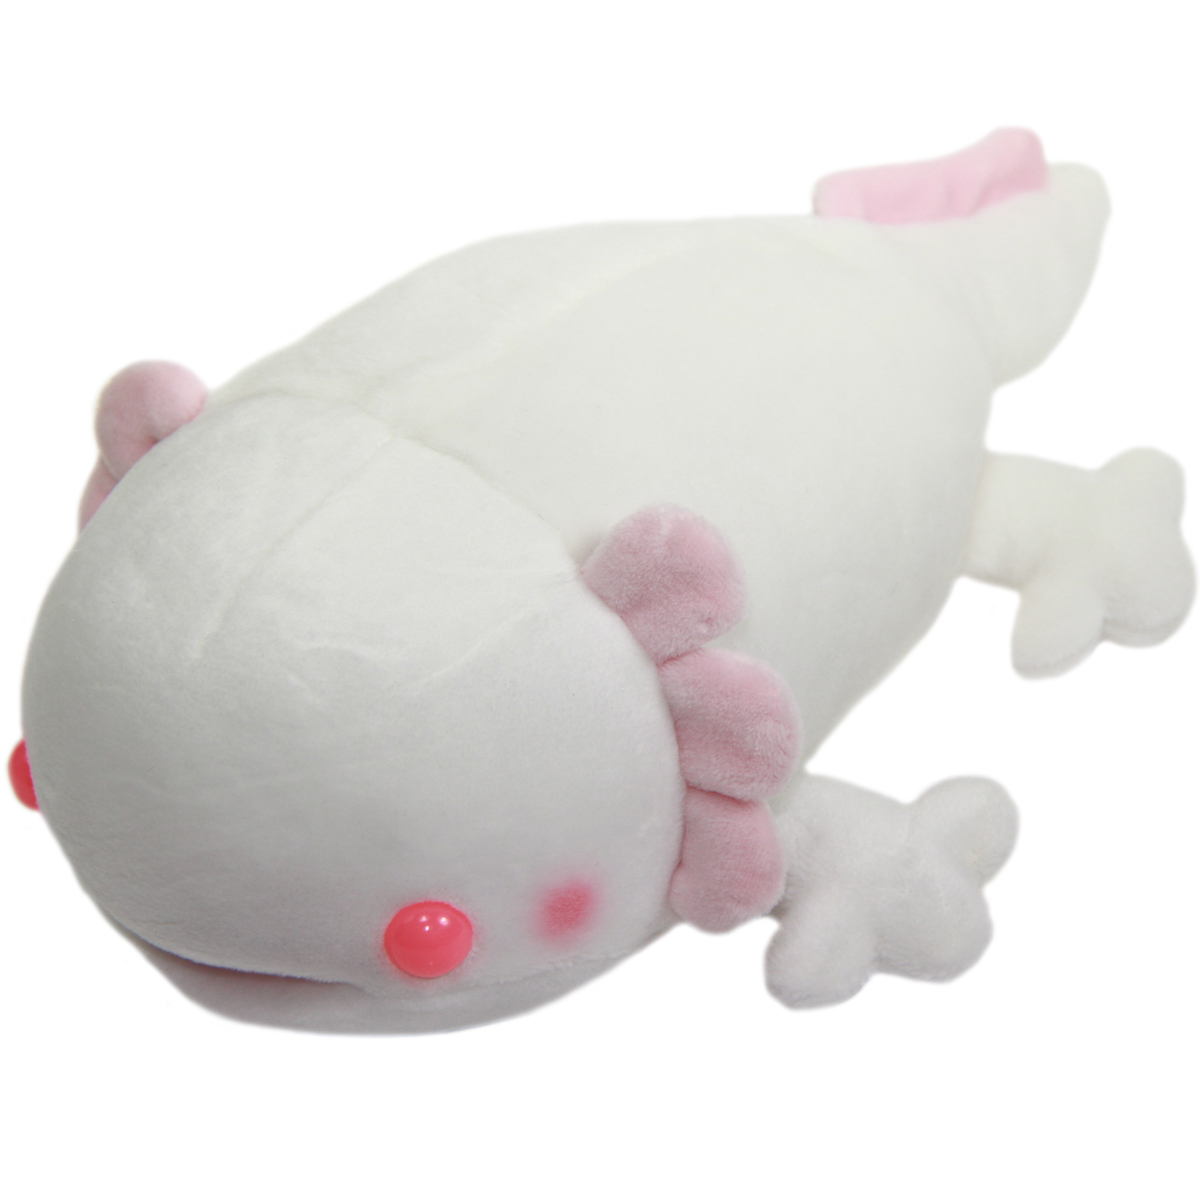 Aquarium Collection Plush Axolotl Plush Toy Super Soft Stuffed Animal White Uparupa